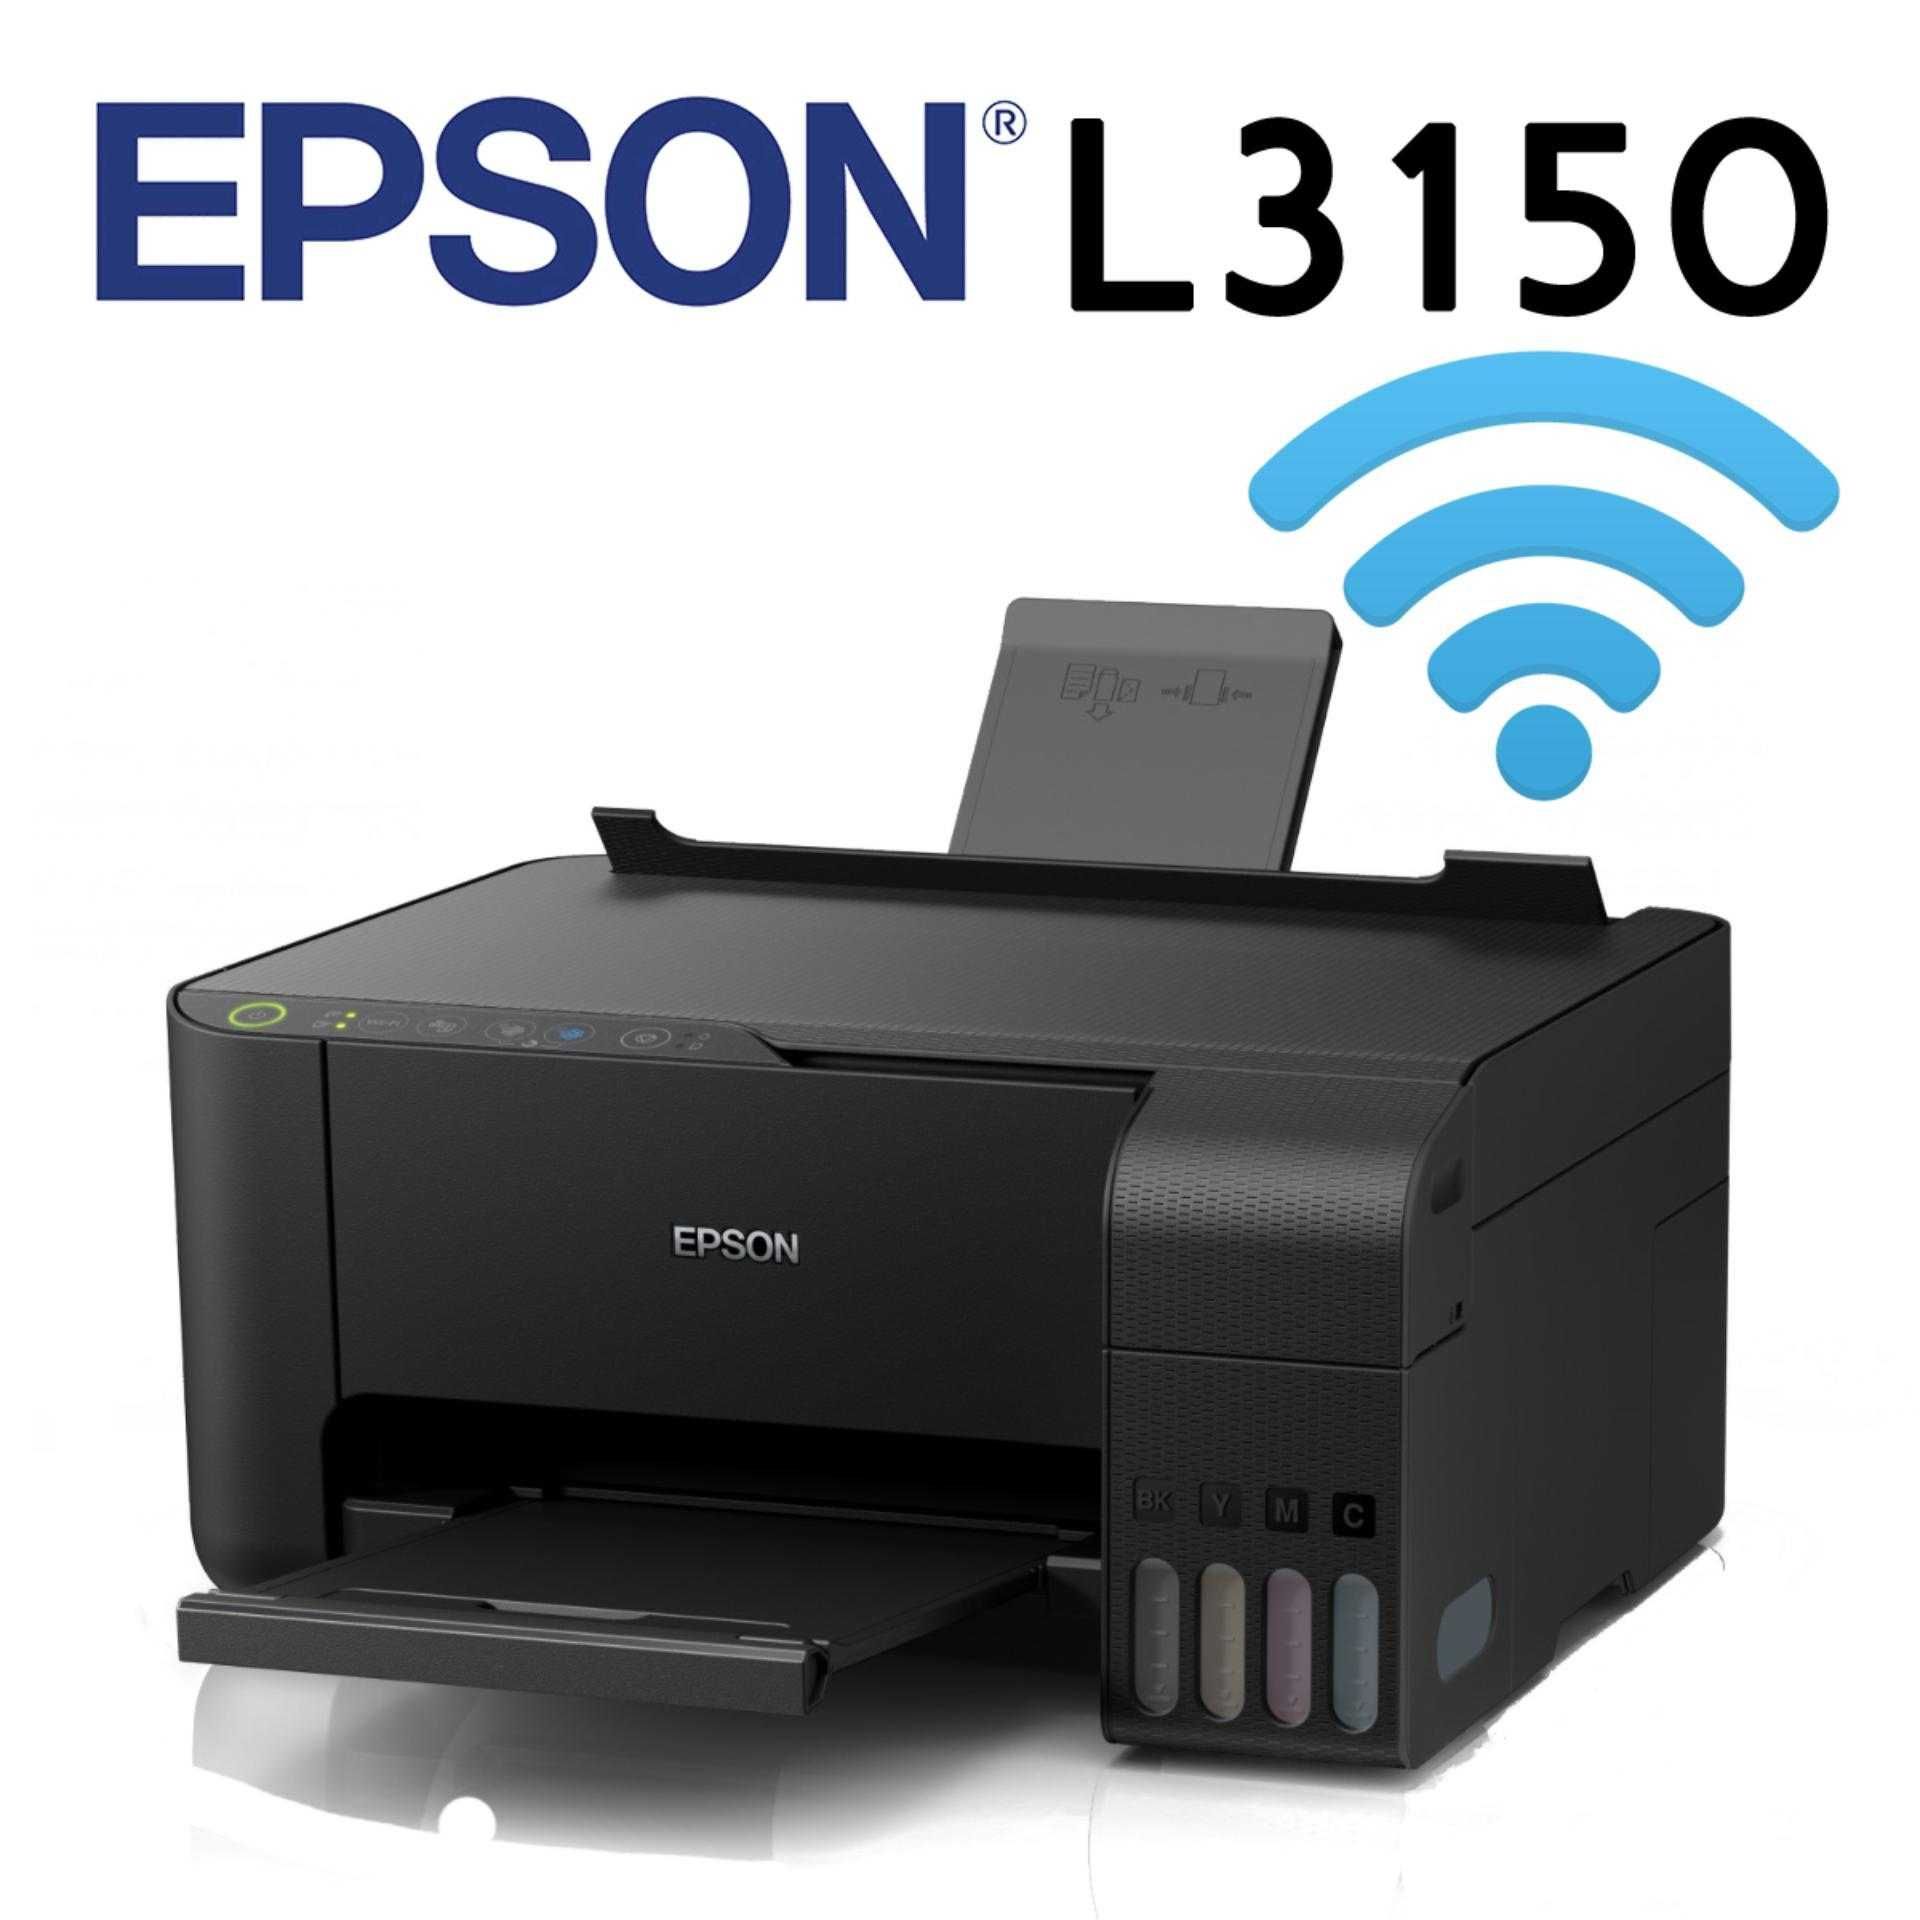 Epson l3150 принтер+сканер 3в1 wi-fi Идеал + доставка ташкент